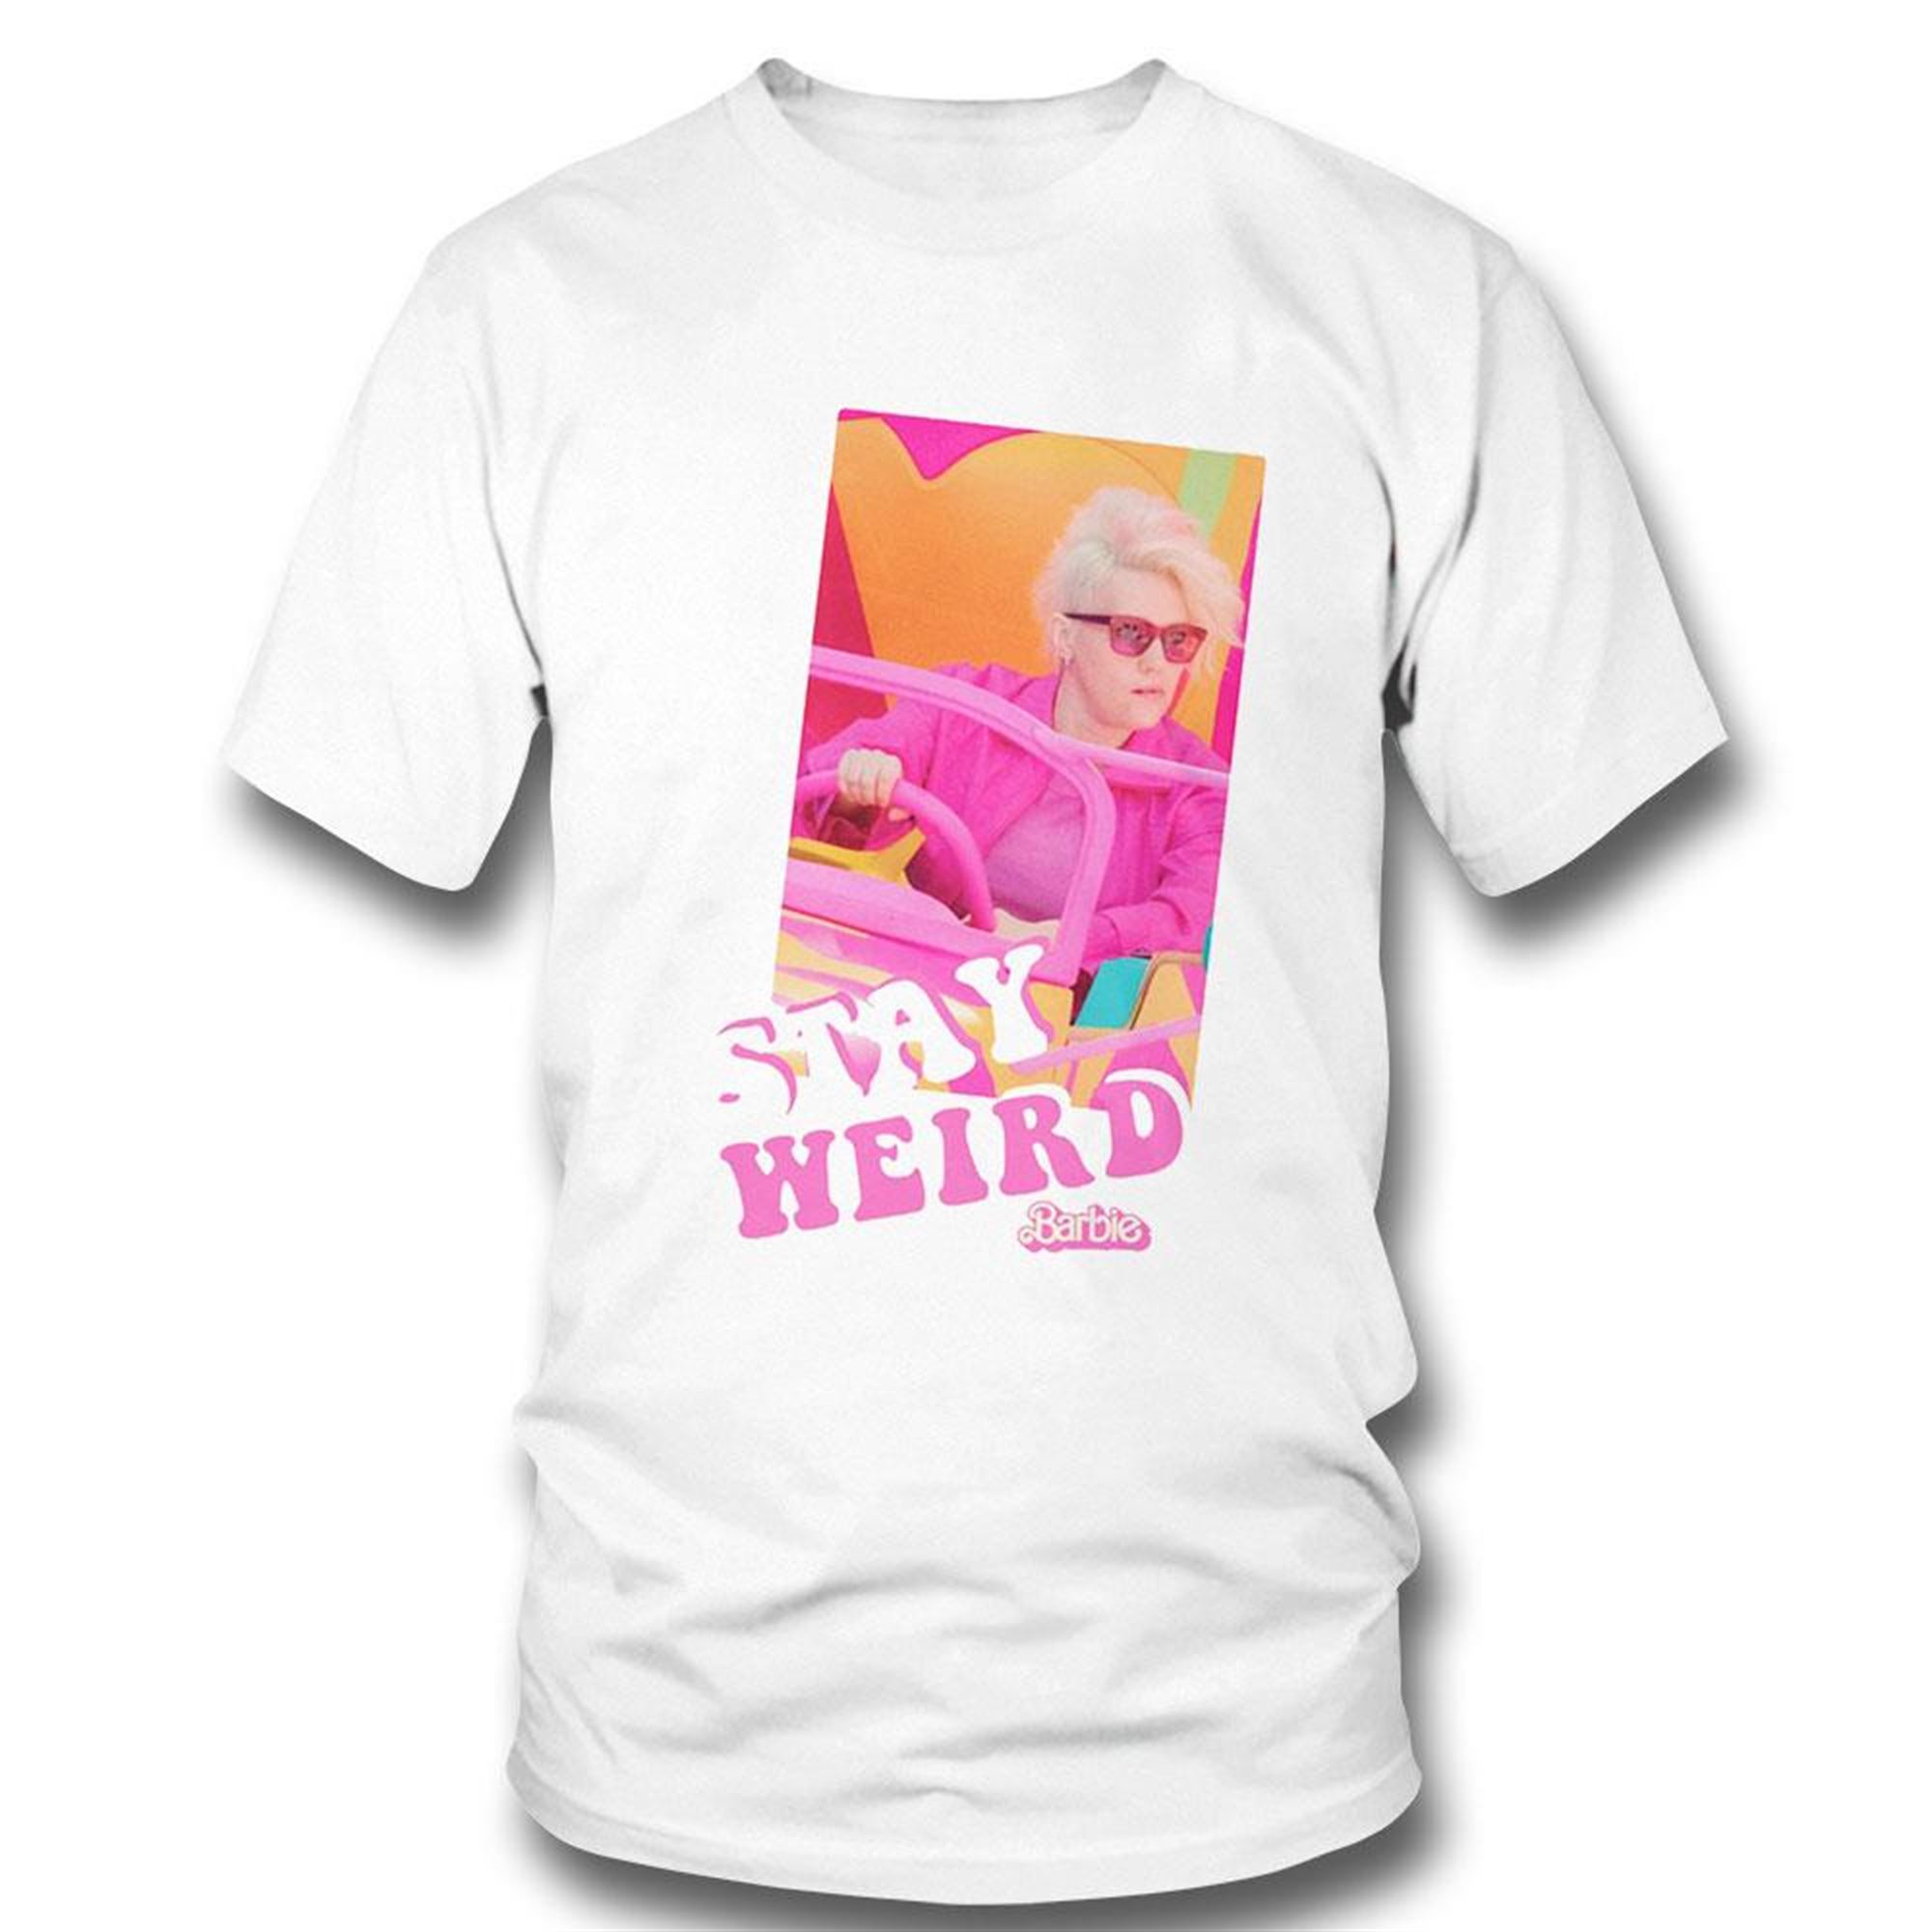 Stay Weird Shirt Barbie The Movie T-shirt